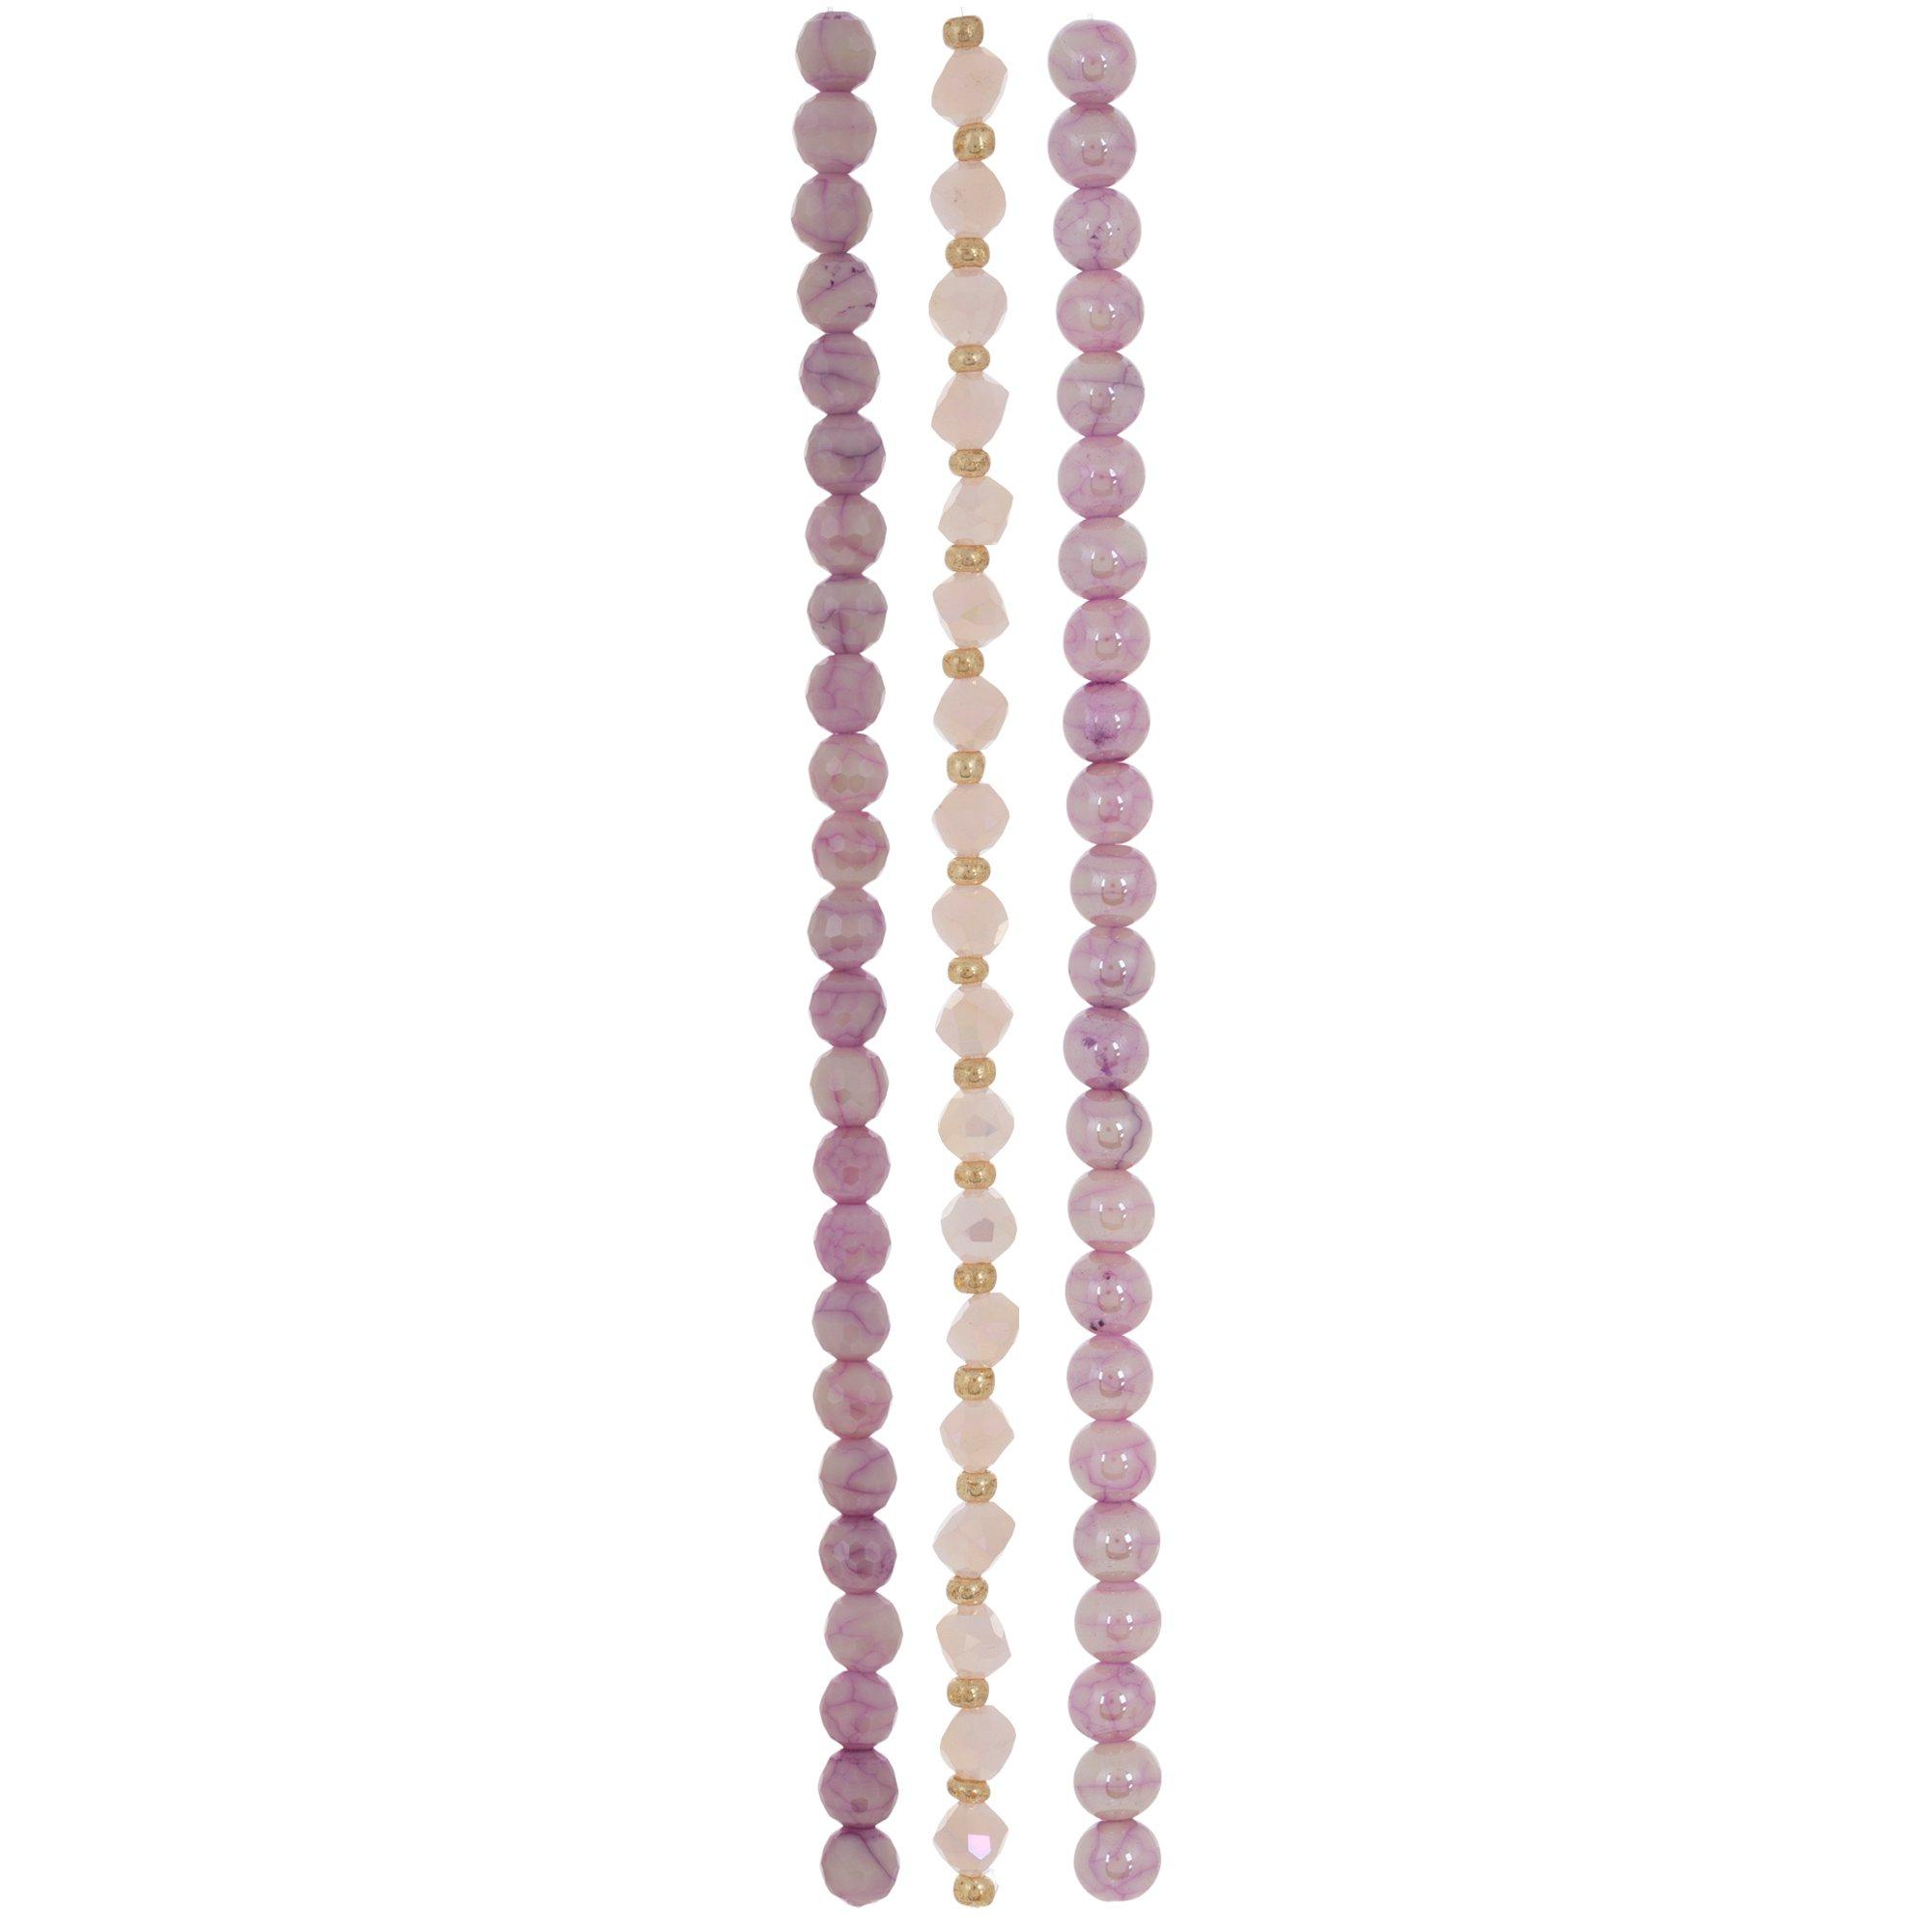 Pink Glass Mermaid Beads, Czech Glass Beads, Beach Jewelry Making,  Transparent Metallic Pink Luster Wash Mermaids, 1 Inch Pick Qty 